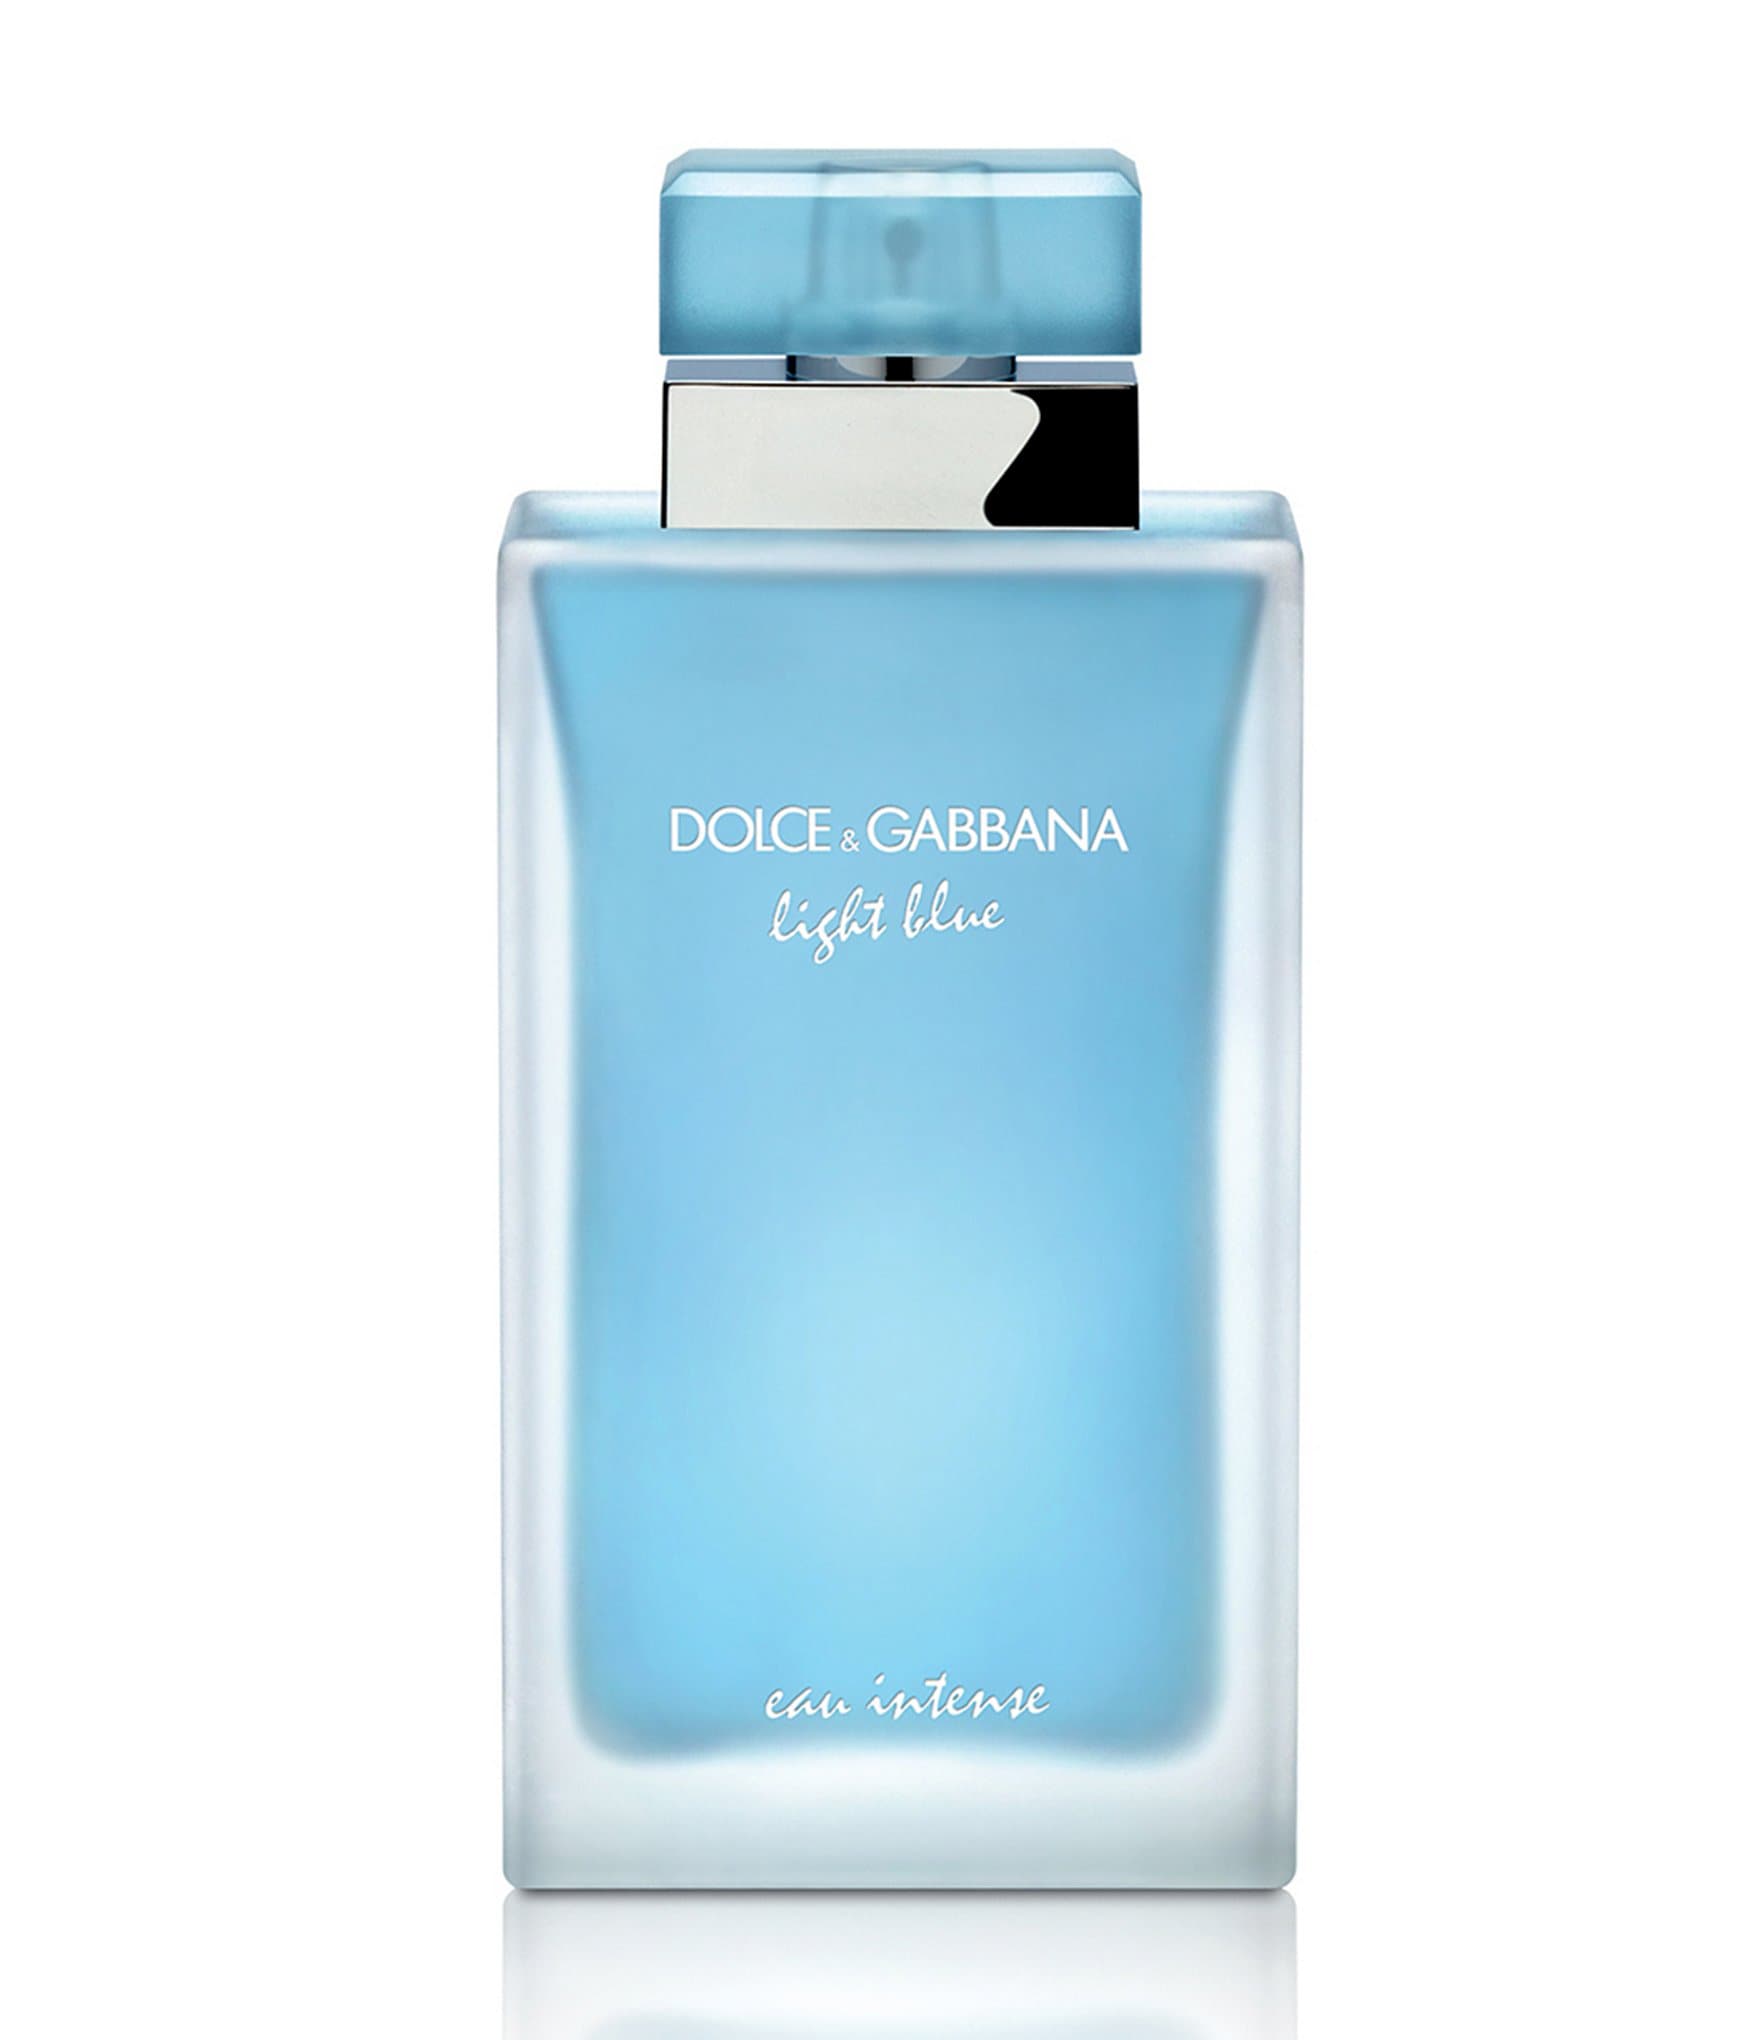 Arriba 71+ imagen dolce gabbana female perfume - Abzlocal.mx